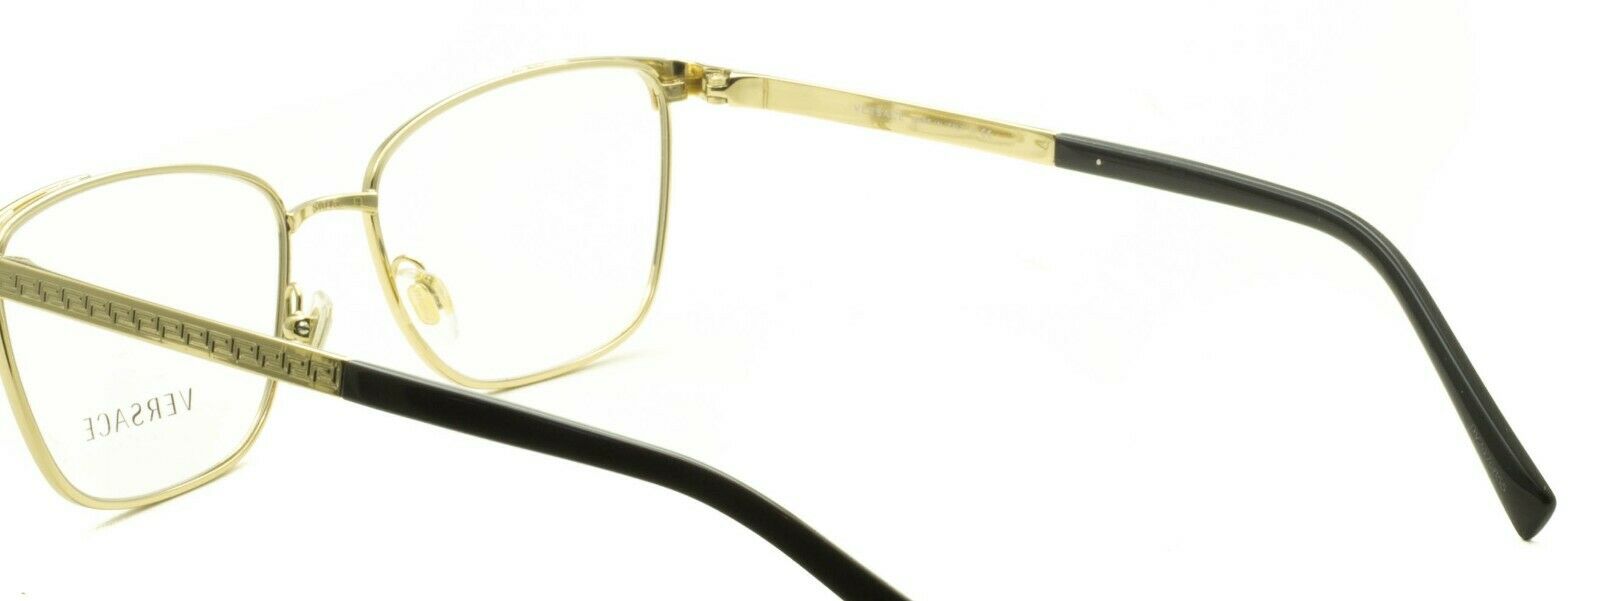 VERSACE 1262 1002 54mm Eyewear FRAMES Glasses RX Optical Eyeglasses Italy - New